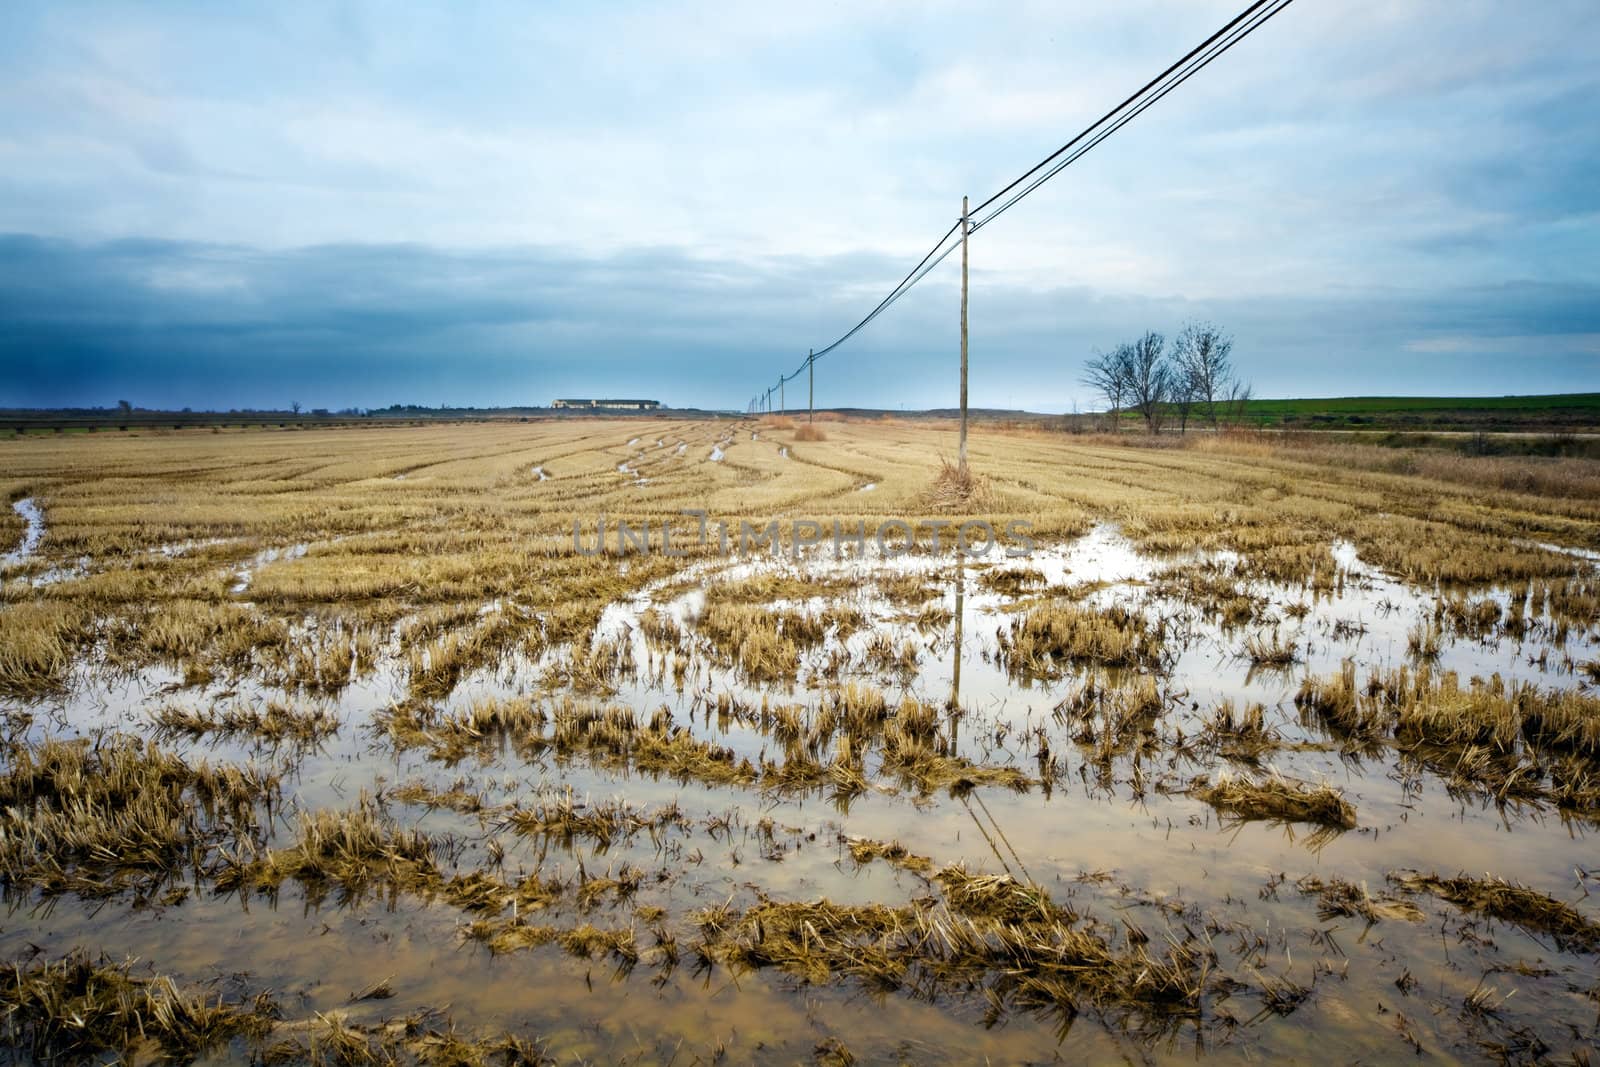 Rural landscape with harvest field flooded